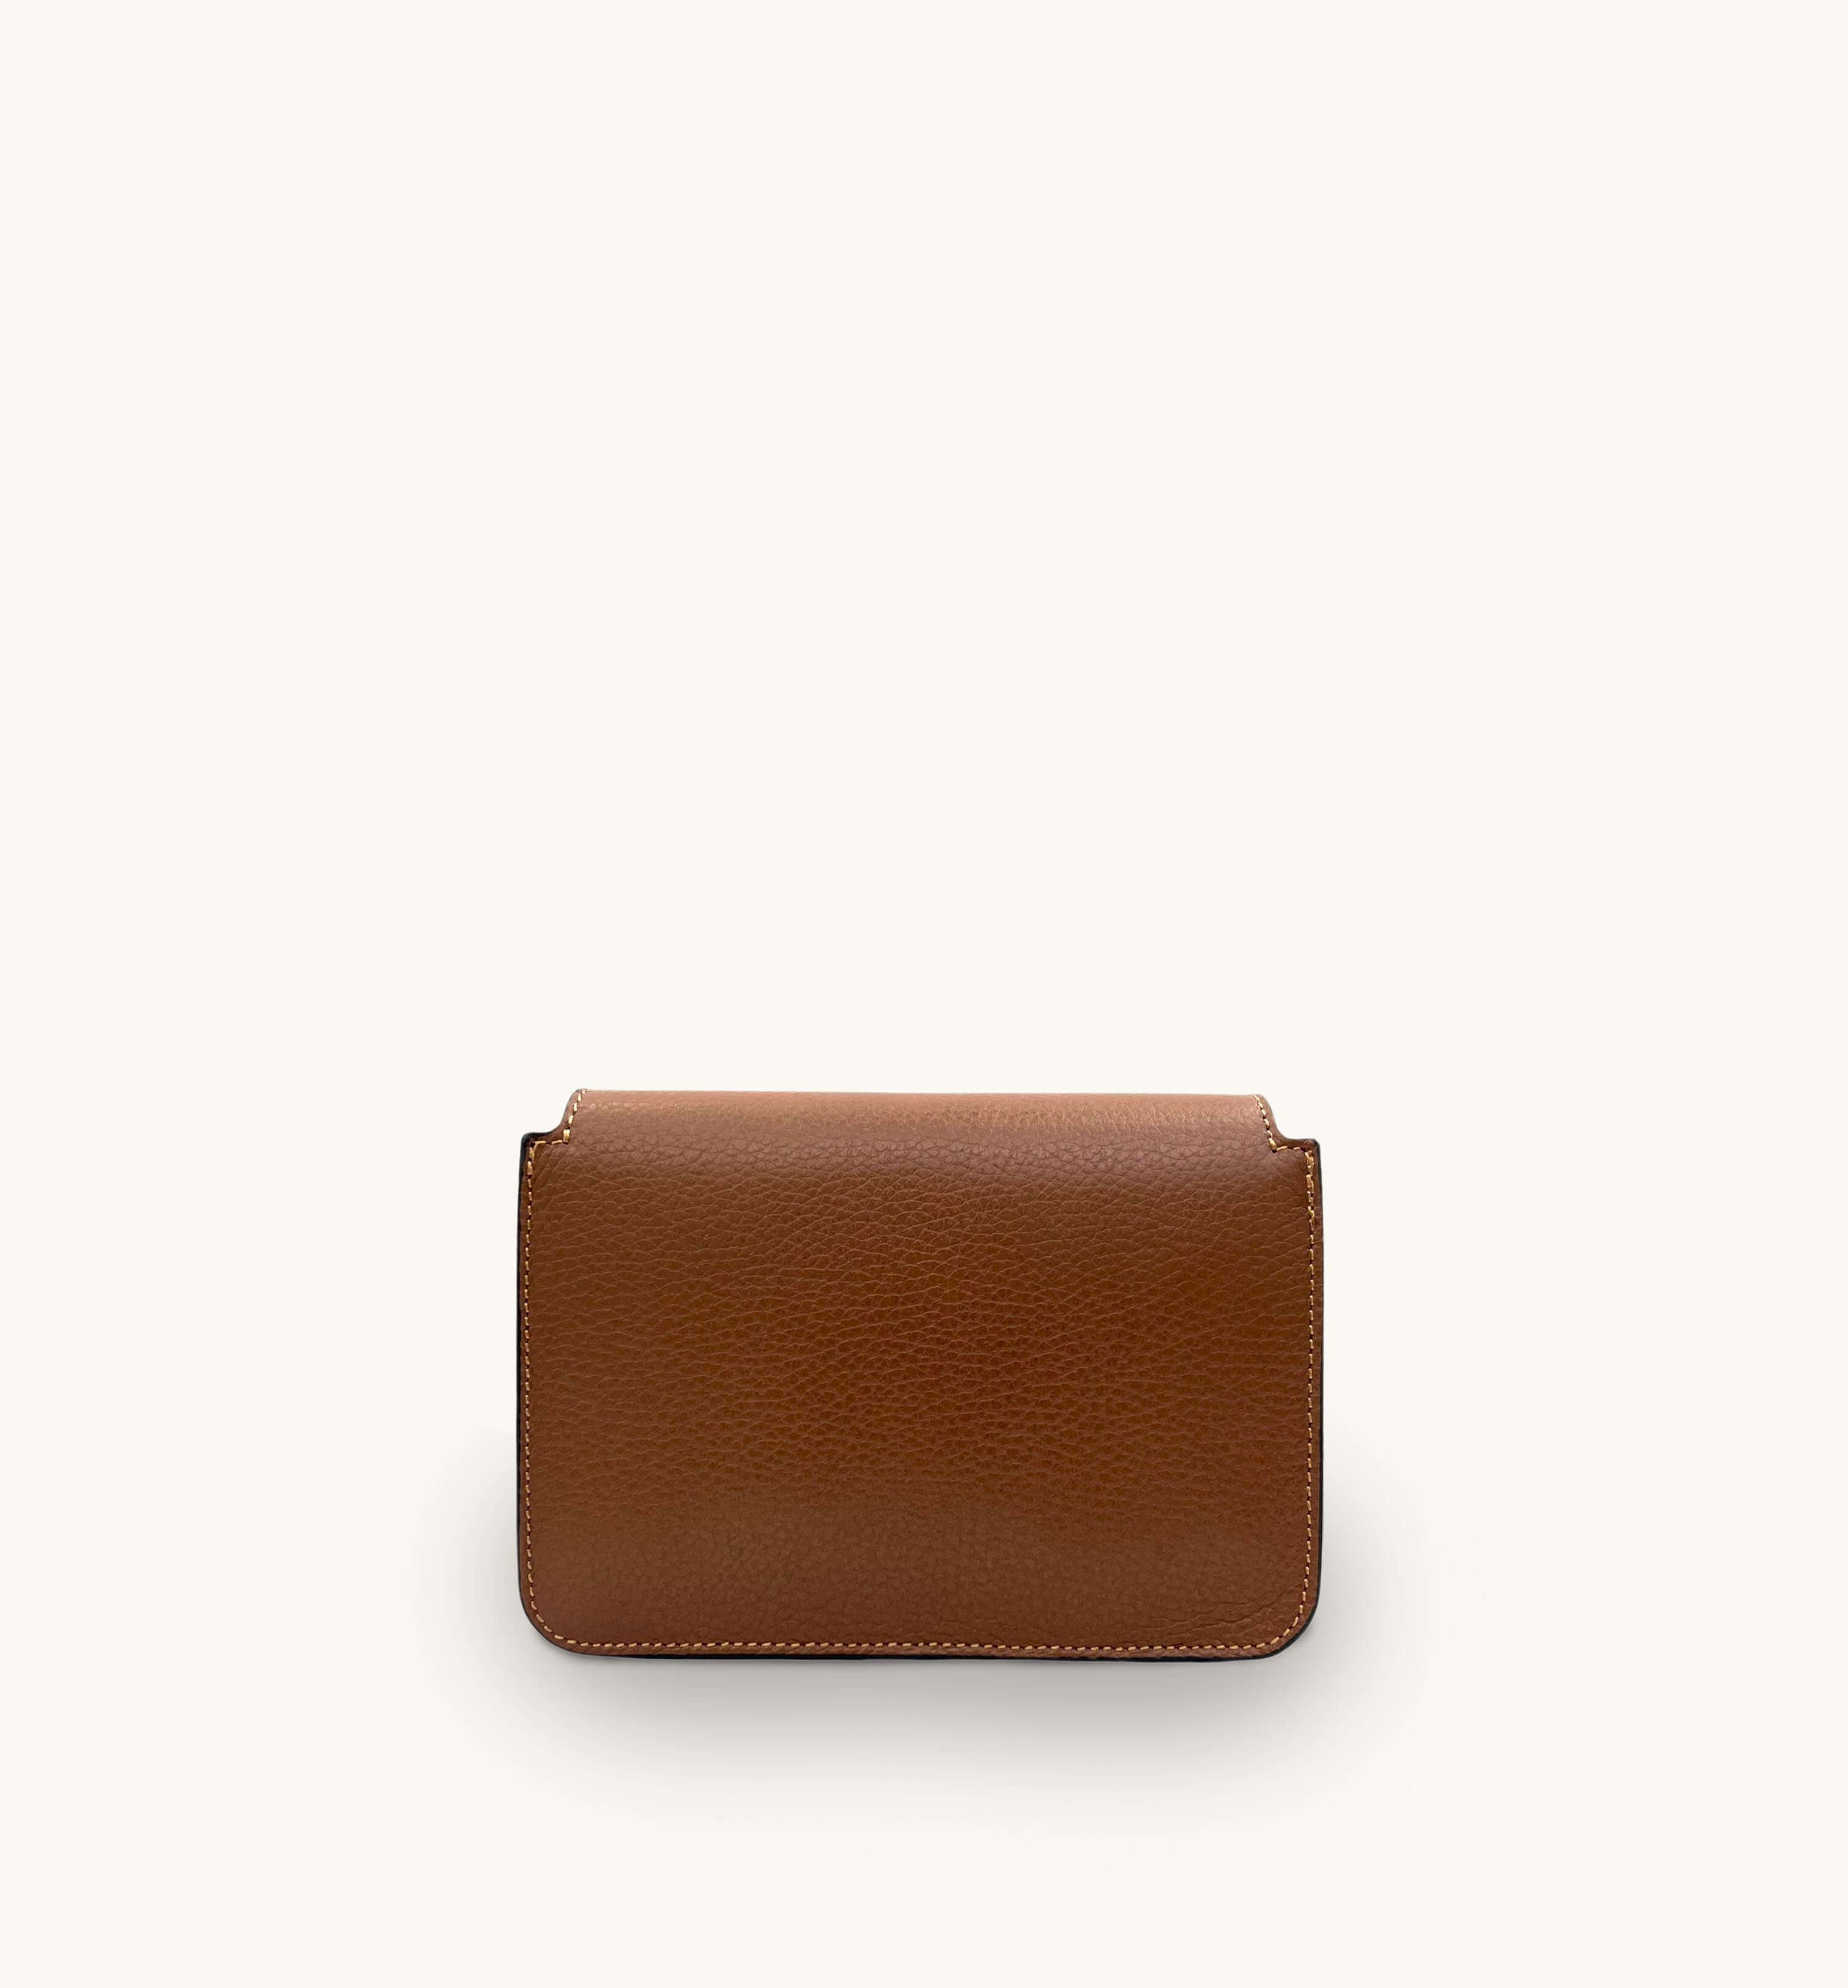 The Newbury Tan Leather Bag